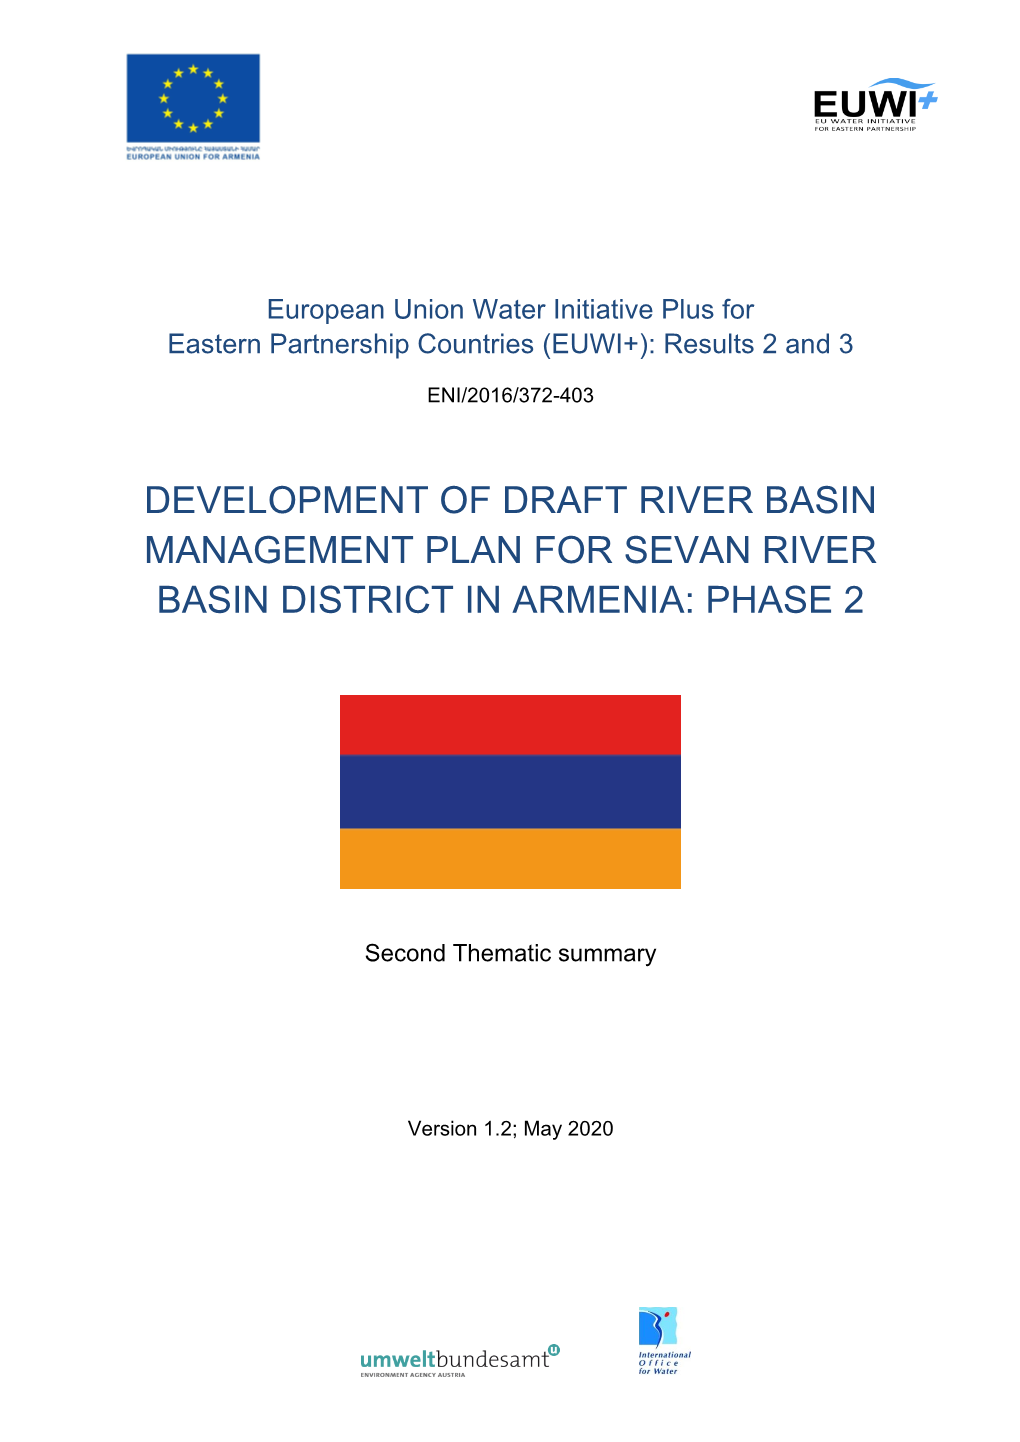 Development of Draft River Basin Management Plan for Sevan River Basin District in Armenia: Phase 2